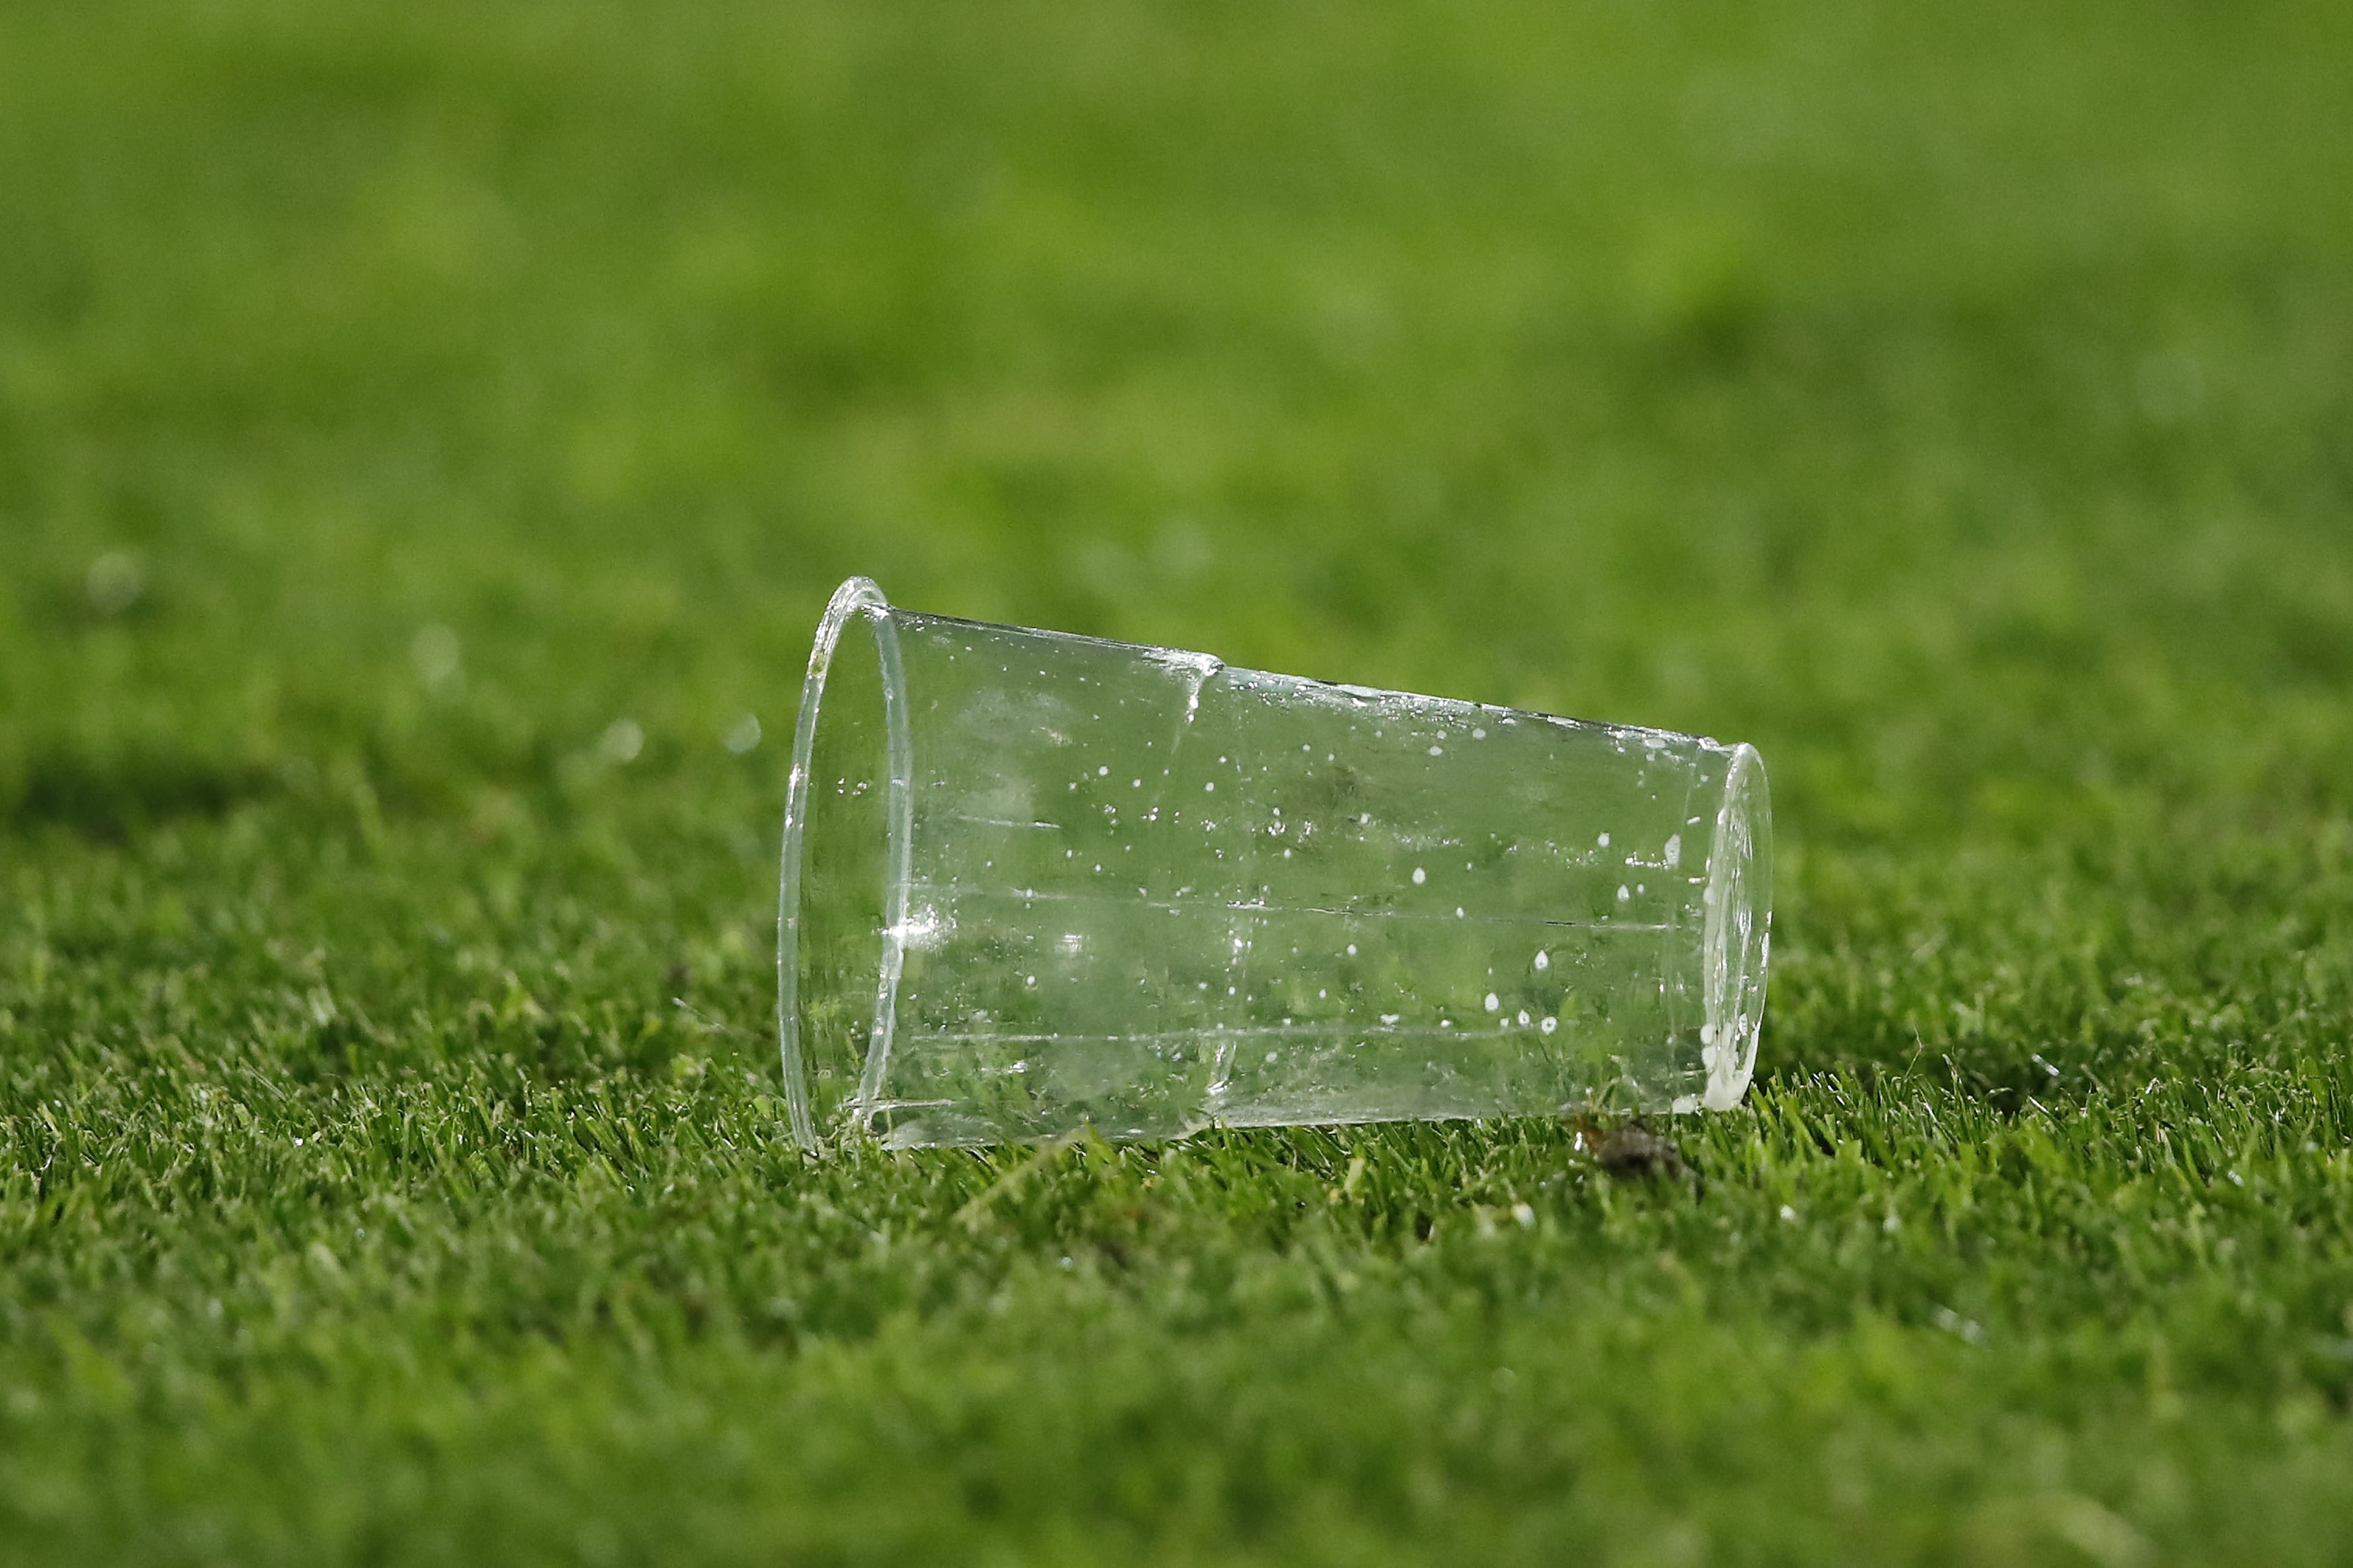 Thuisduels FC Groningen en SC Cambuur stilgelegd na gooien van bekers op veld